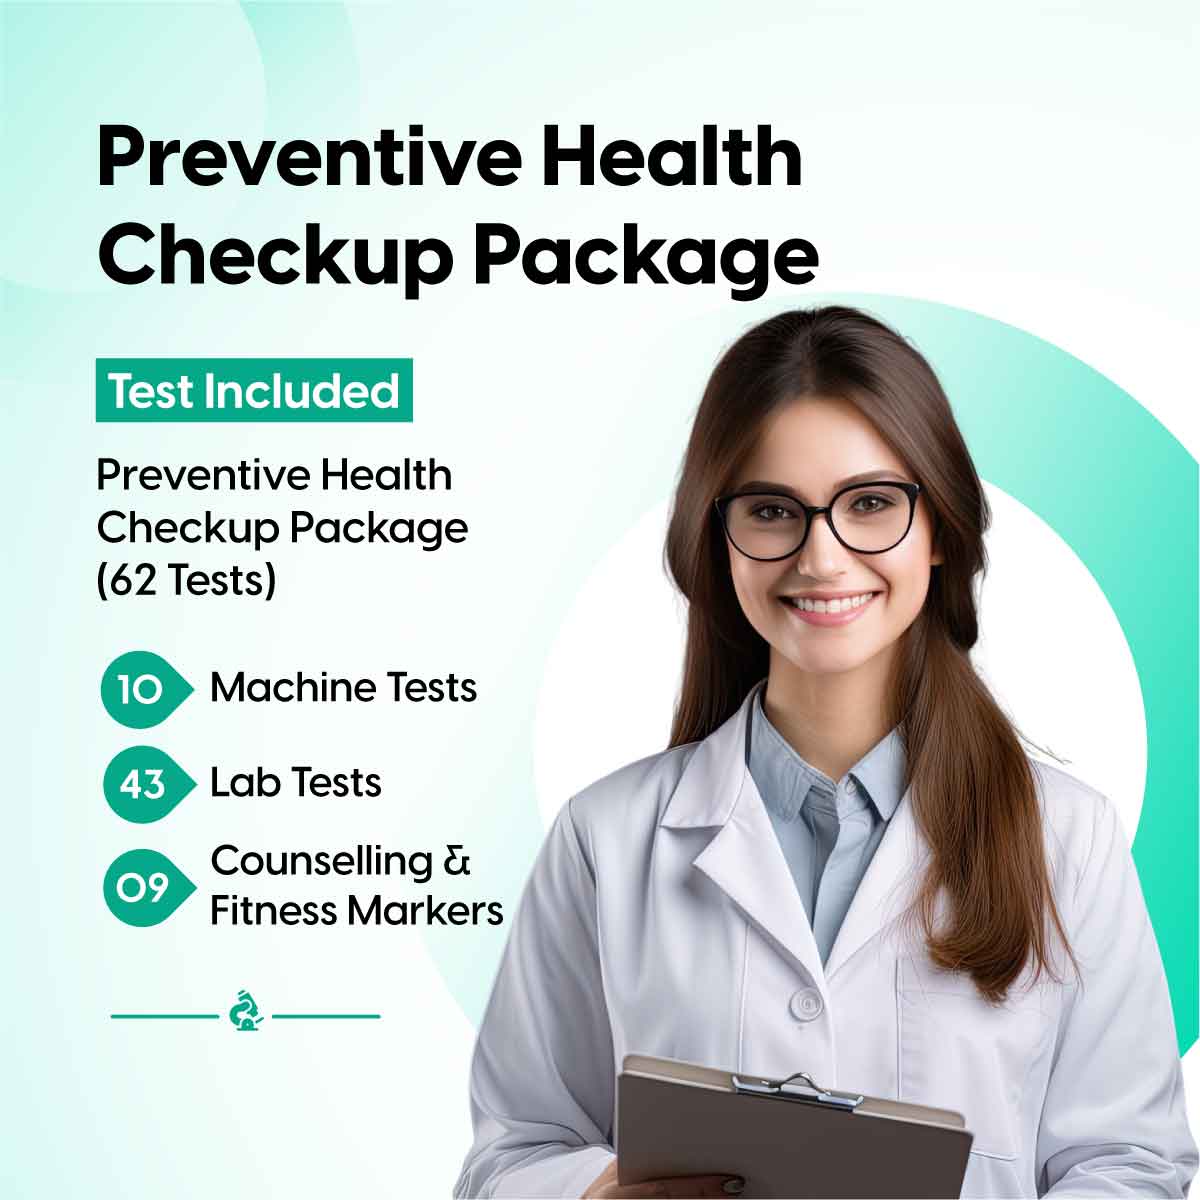 Preventive Health Checkup Package